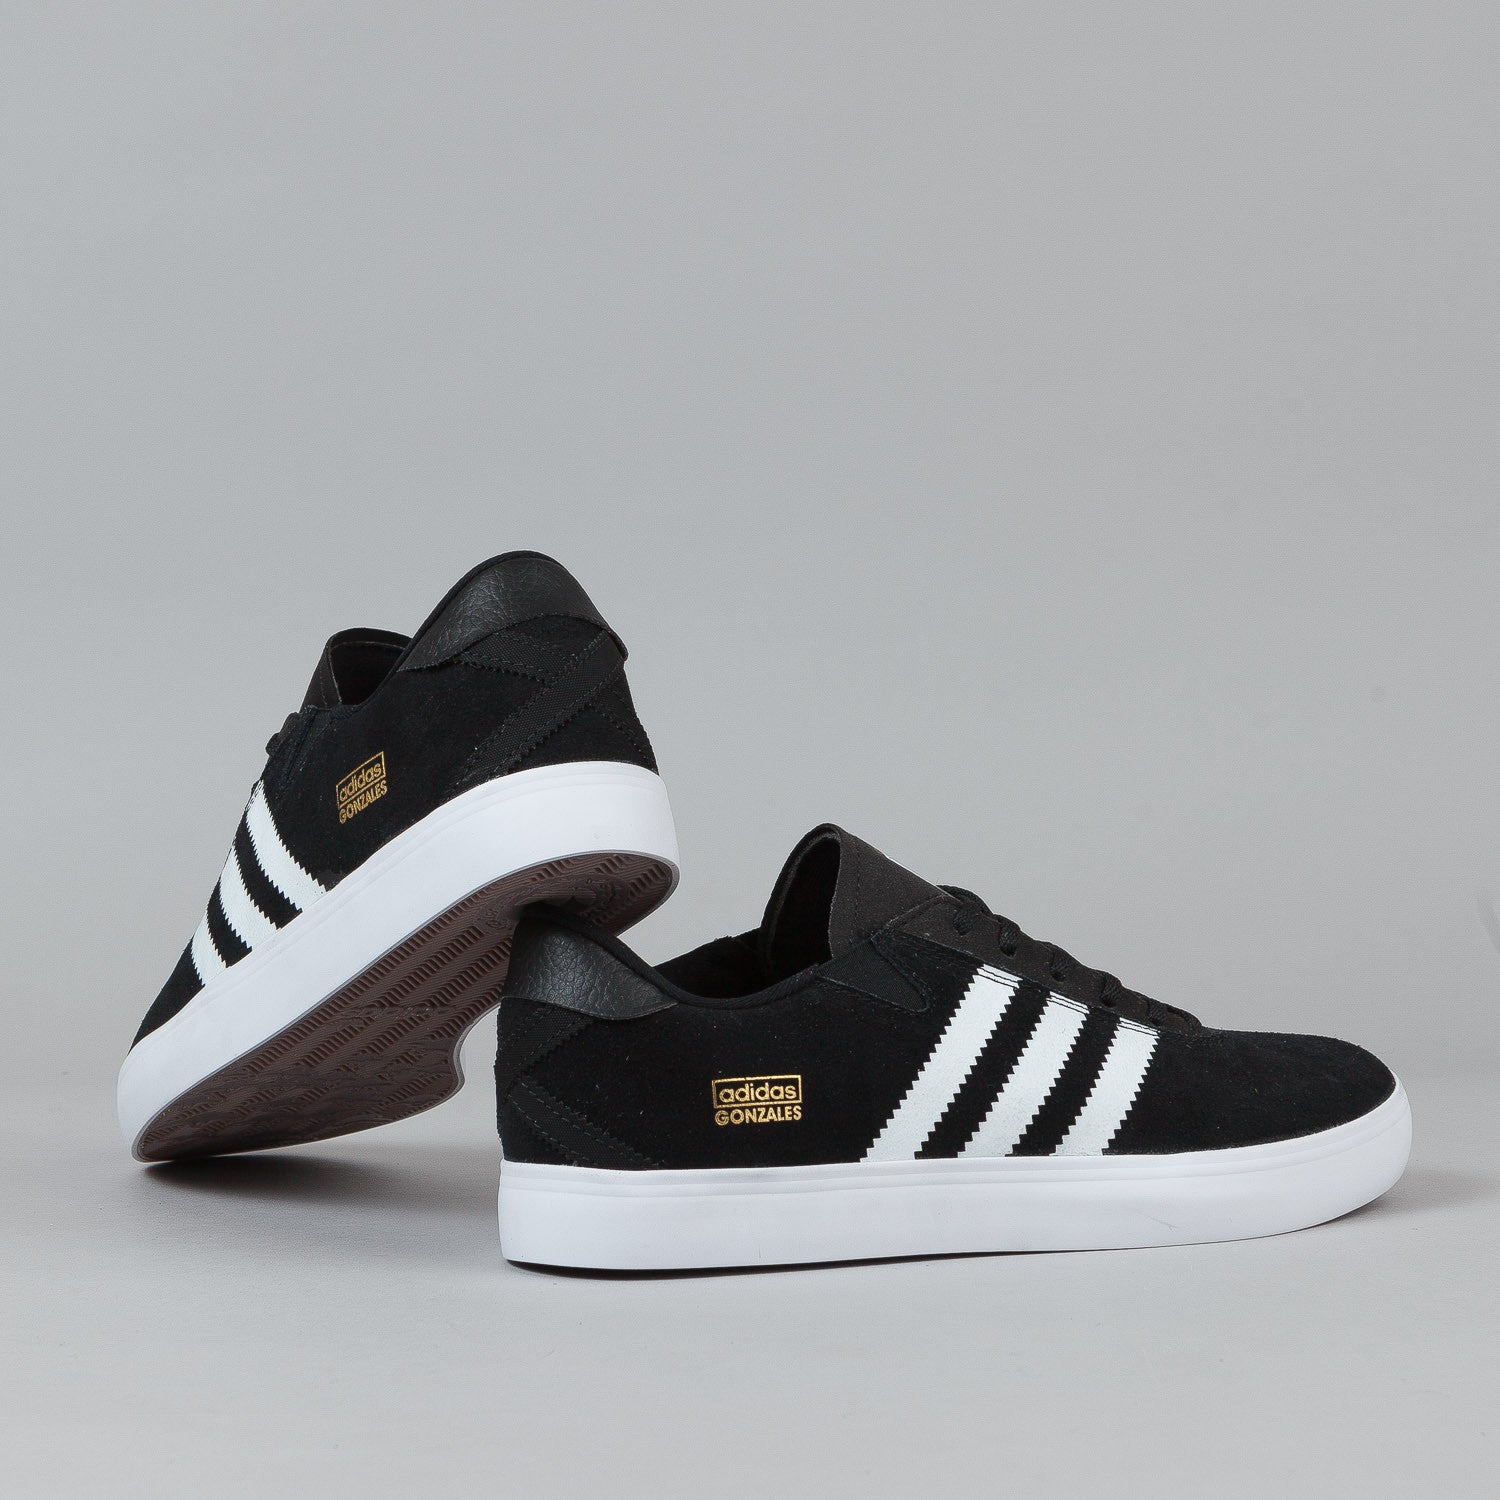 Adidas Gonz Pro Shoes - Black / White / Black | Flatspot